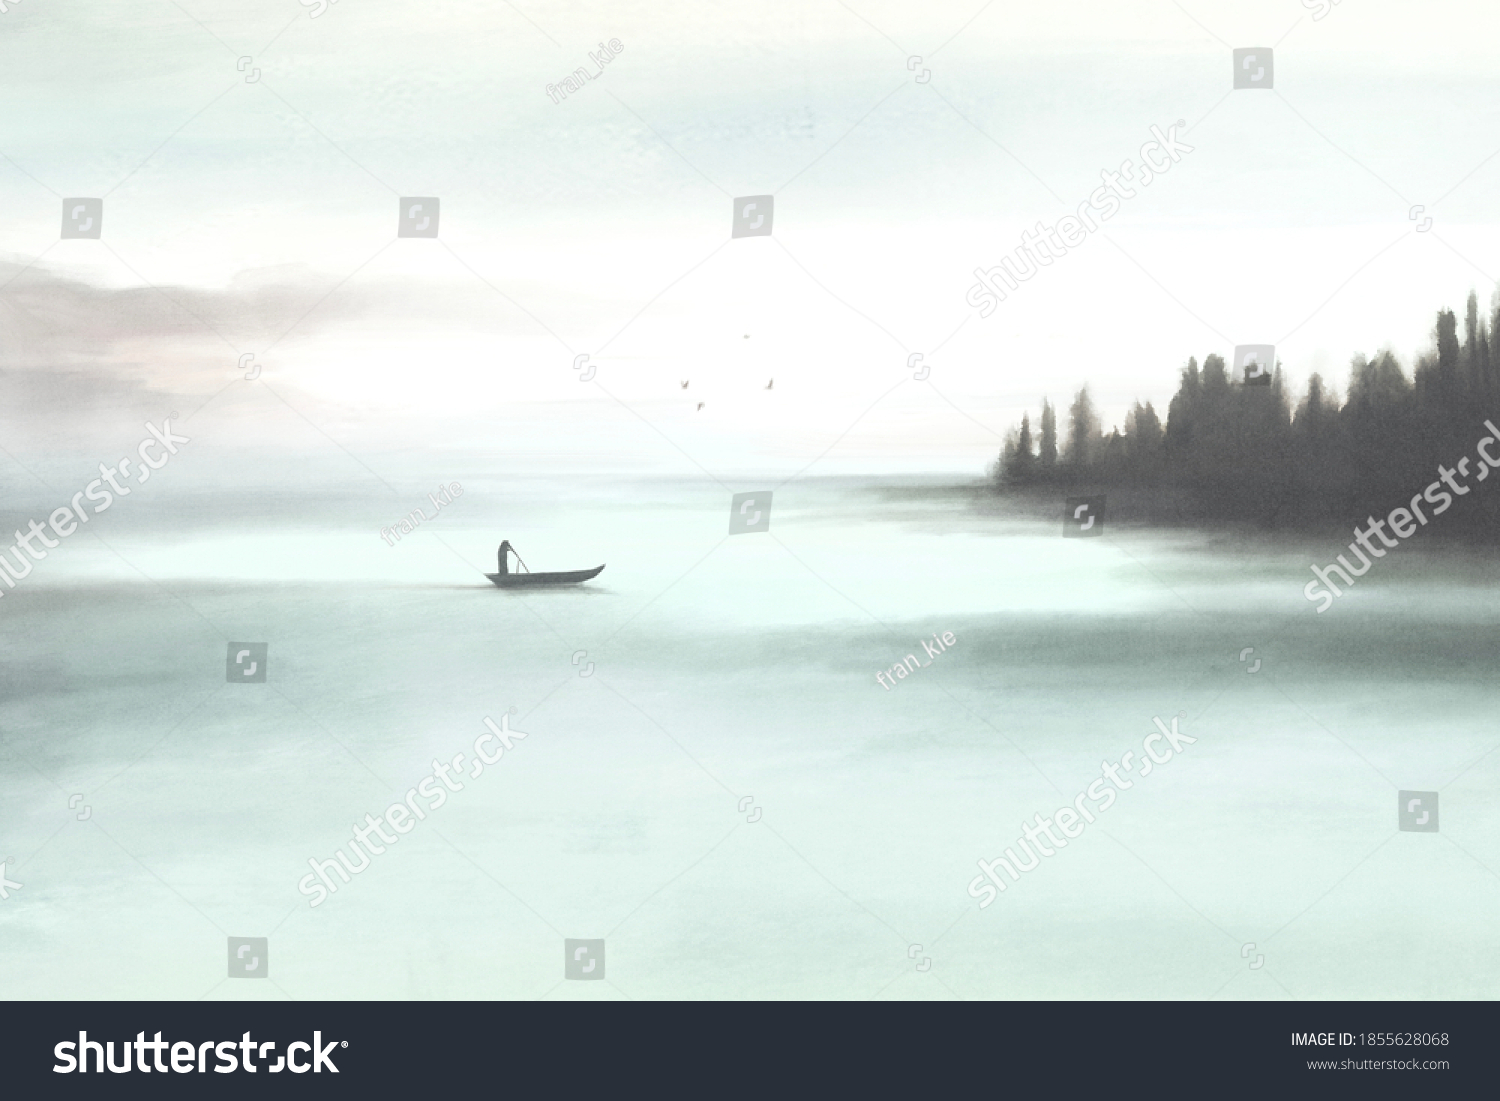 illustration of man paddling in a calm mystic minimal surreal lake